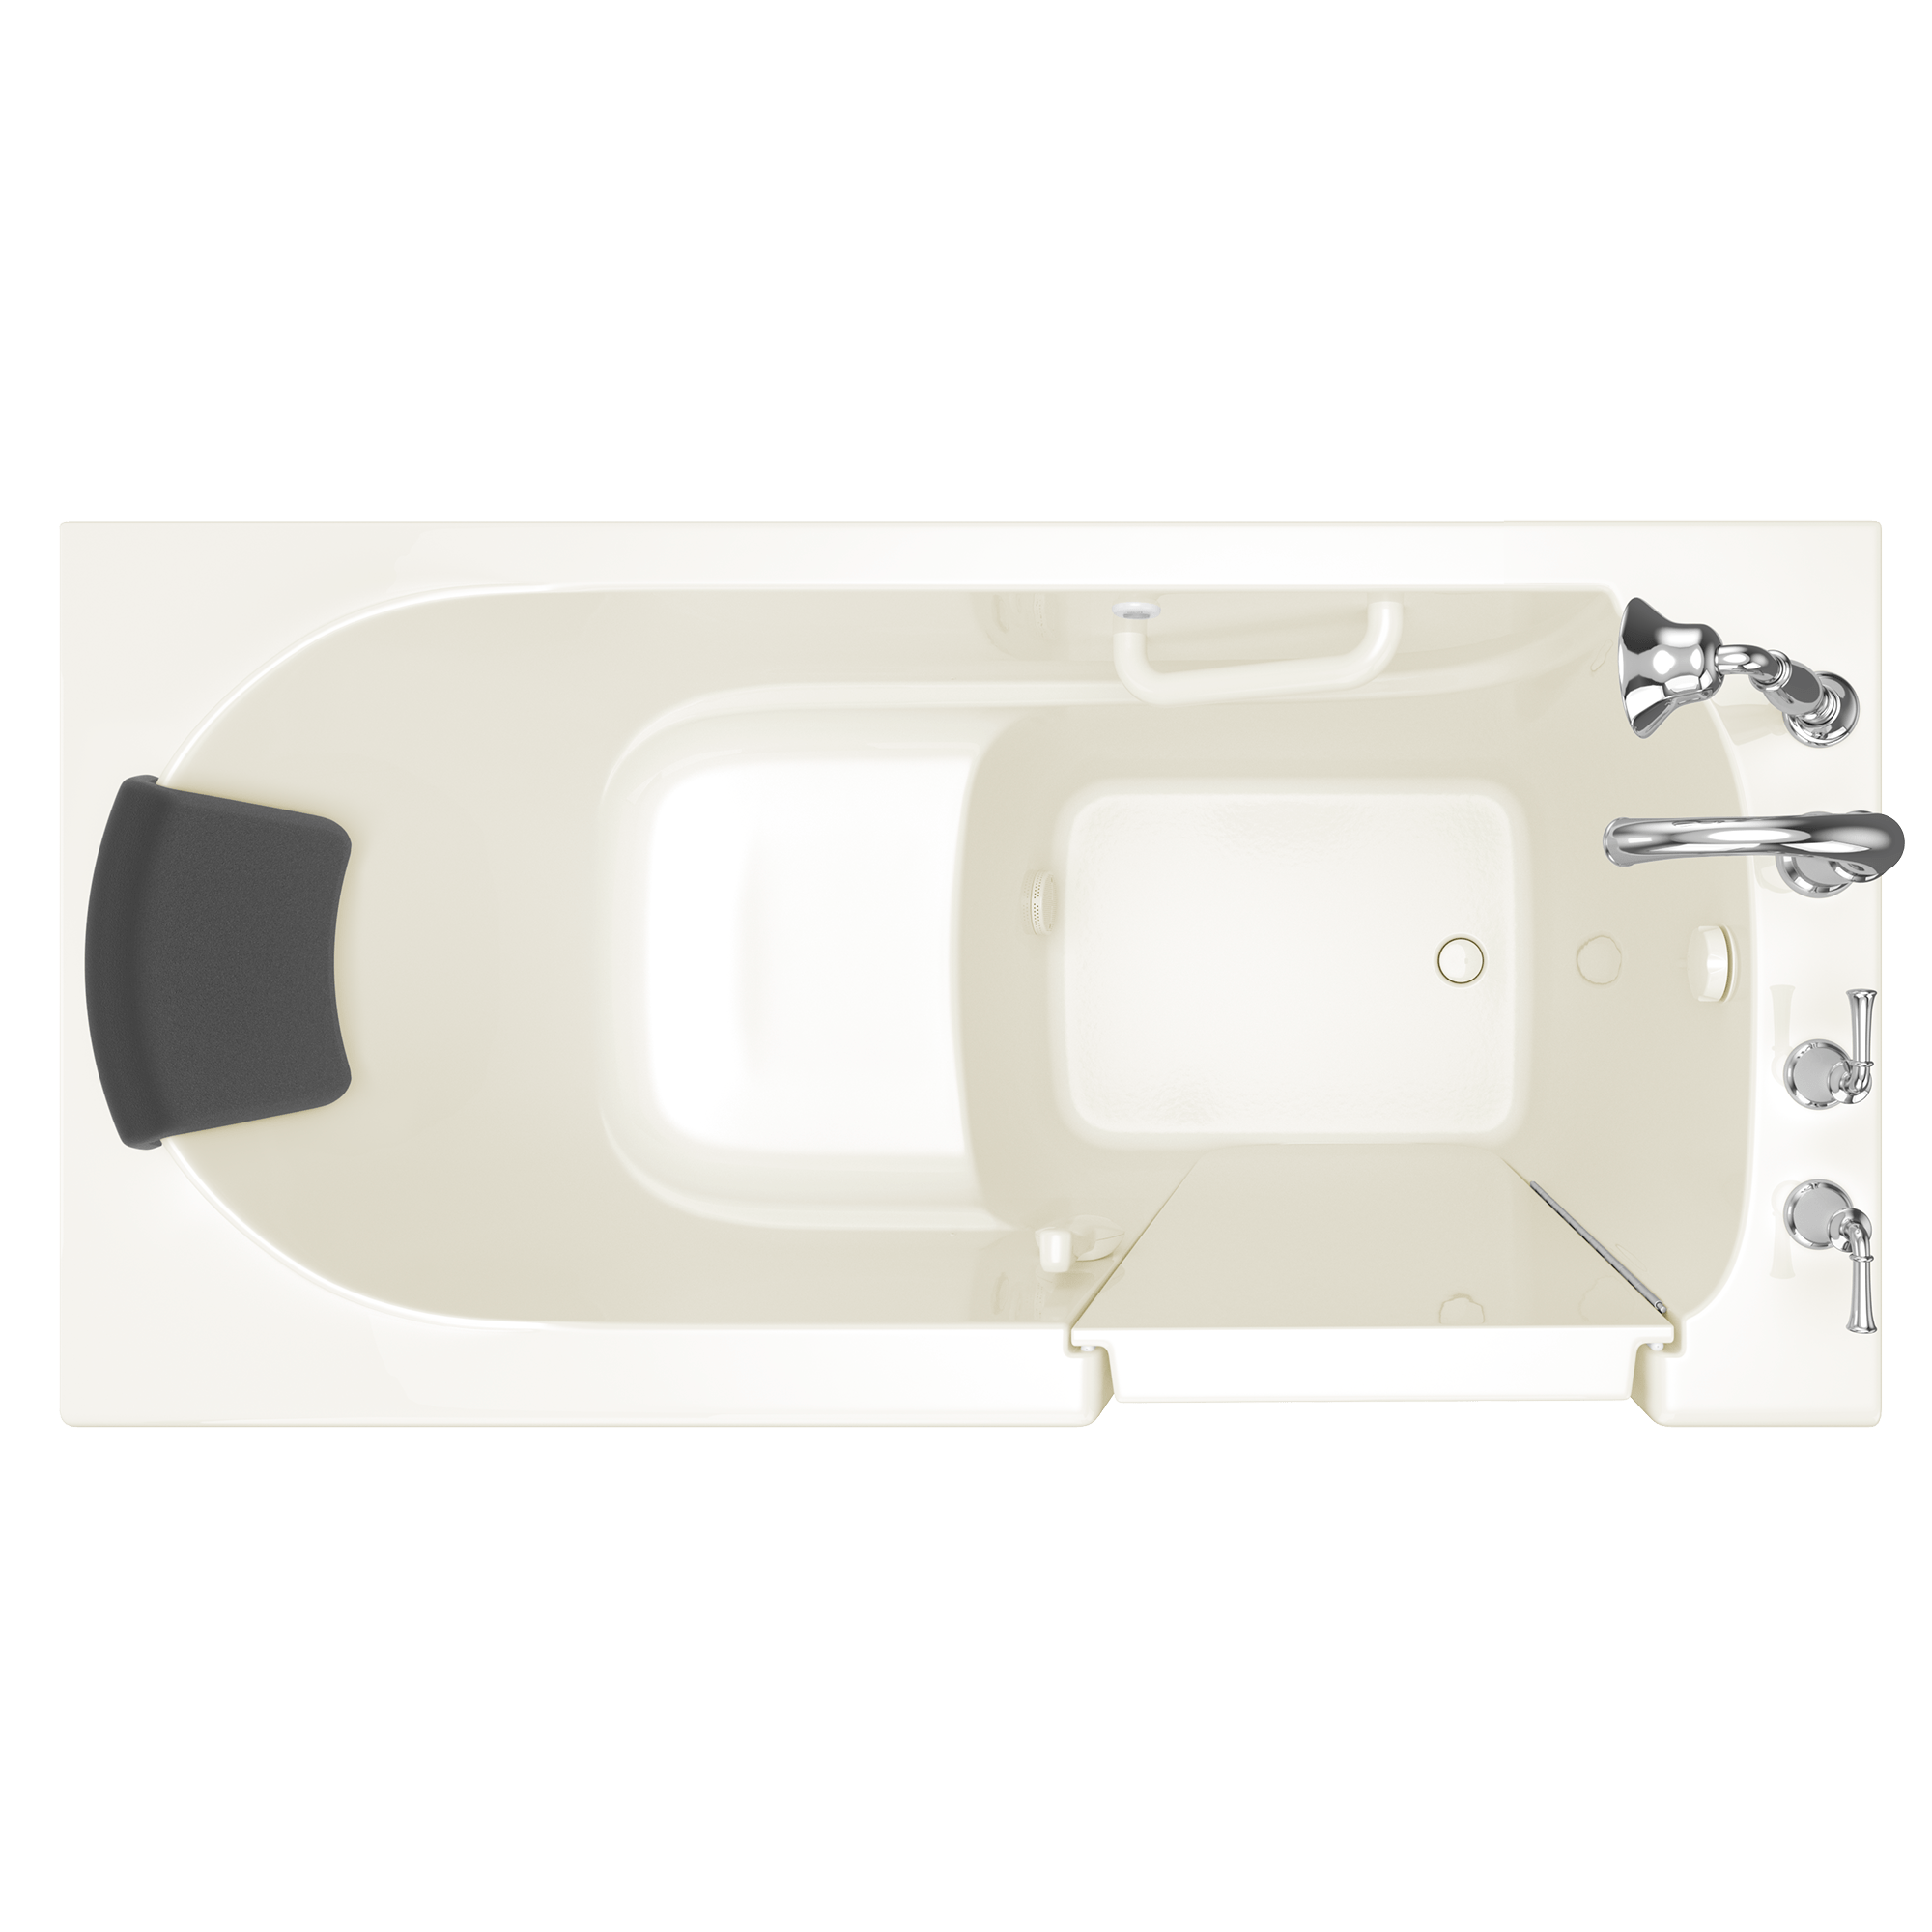 Gelcoat Premium Series 60x30 Inch Soaking Walk-In Bathtub - Right Hand Door and Drain